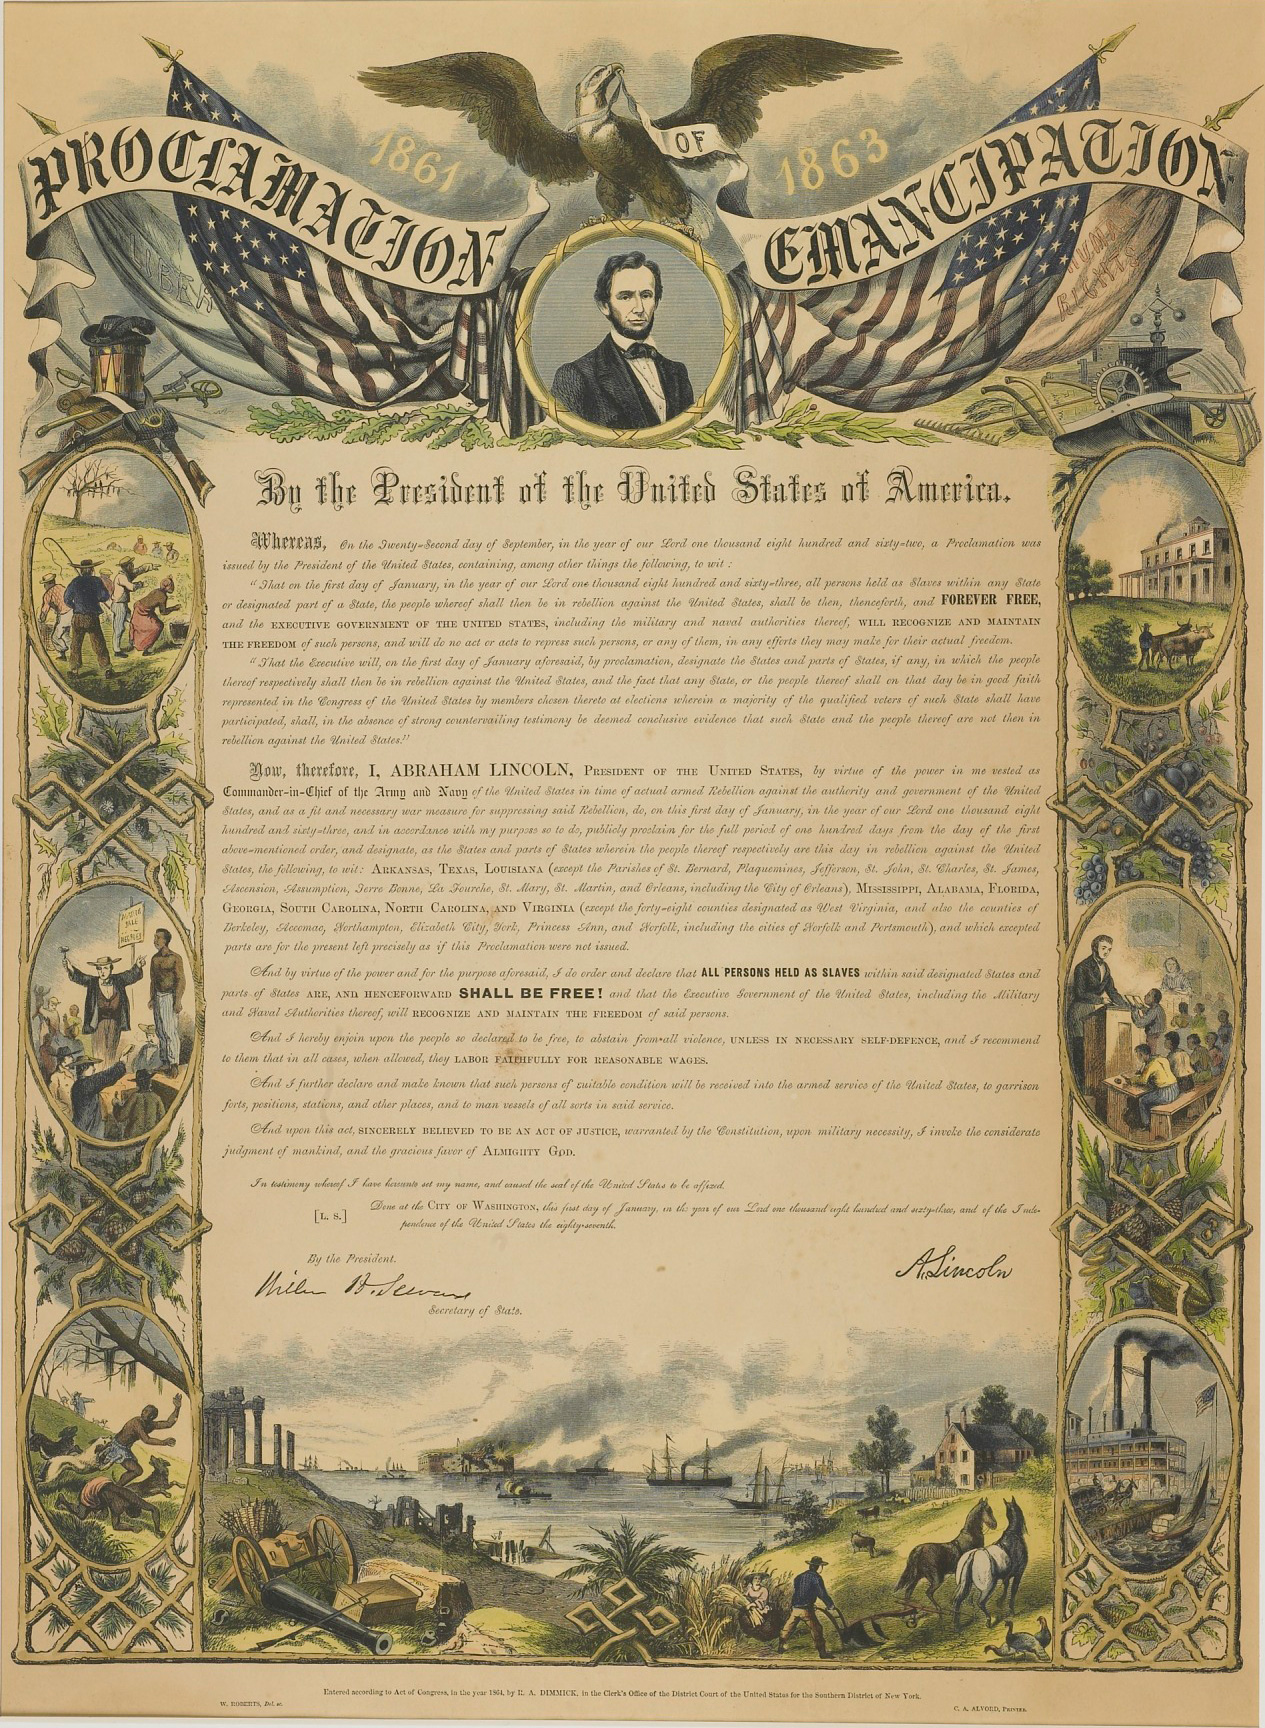 The Proclamation of Emancipation 1861-1863